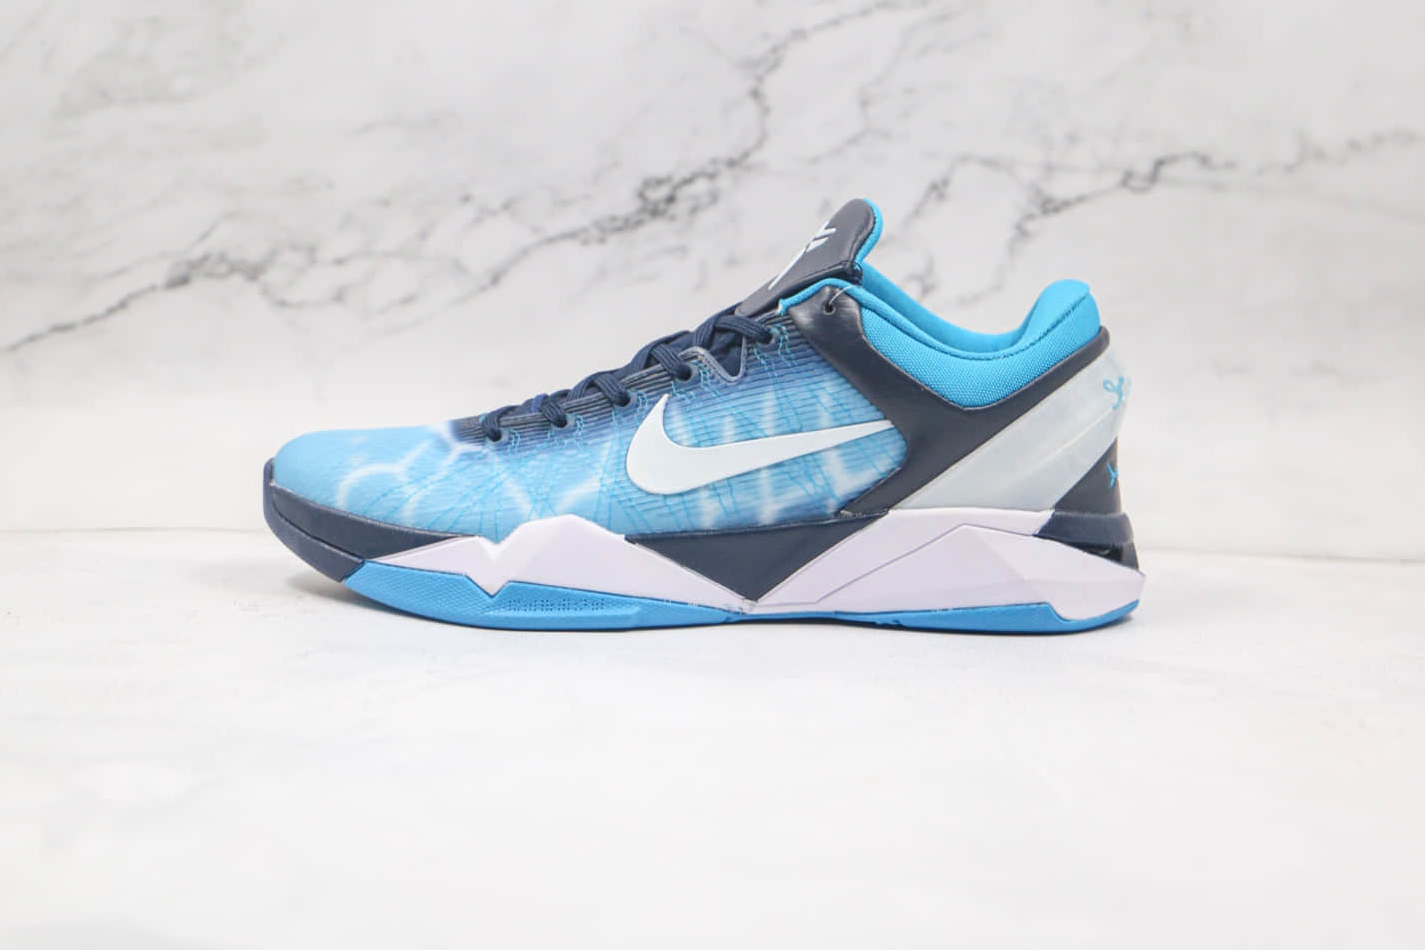 Nike Zoom Kobe 7 System 'Shark' 488371-401 - High-performance basketball shoes